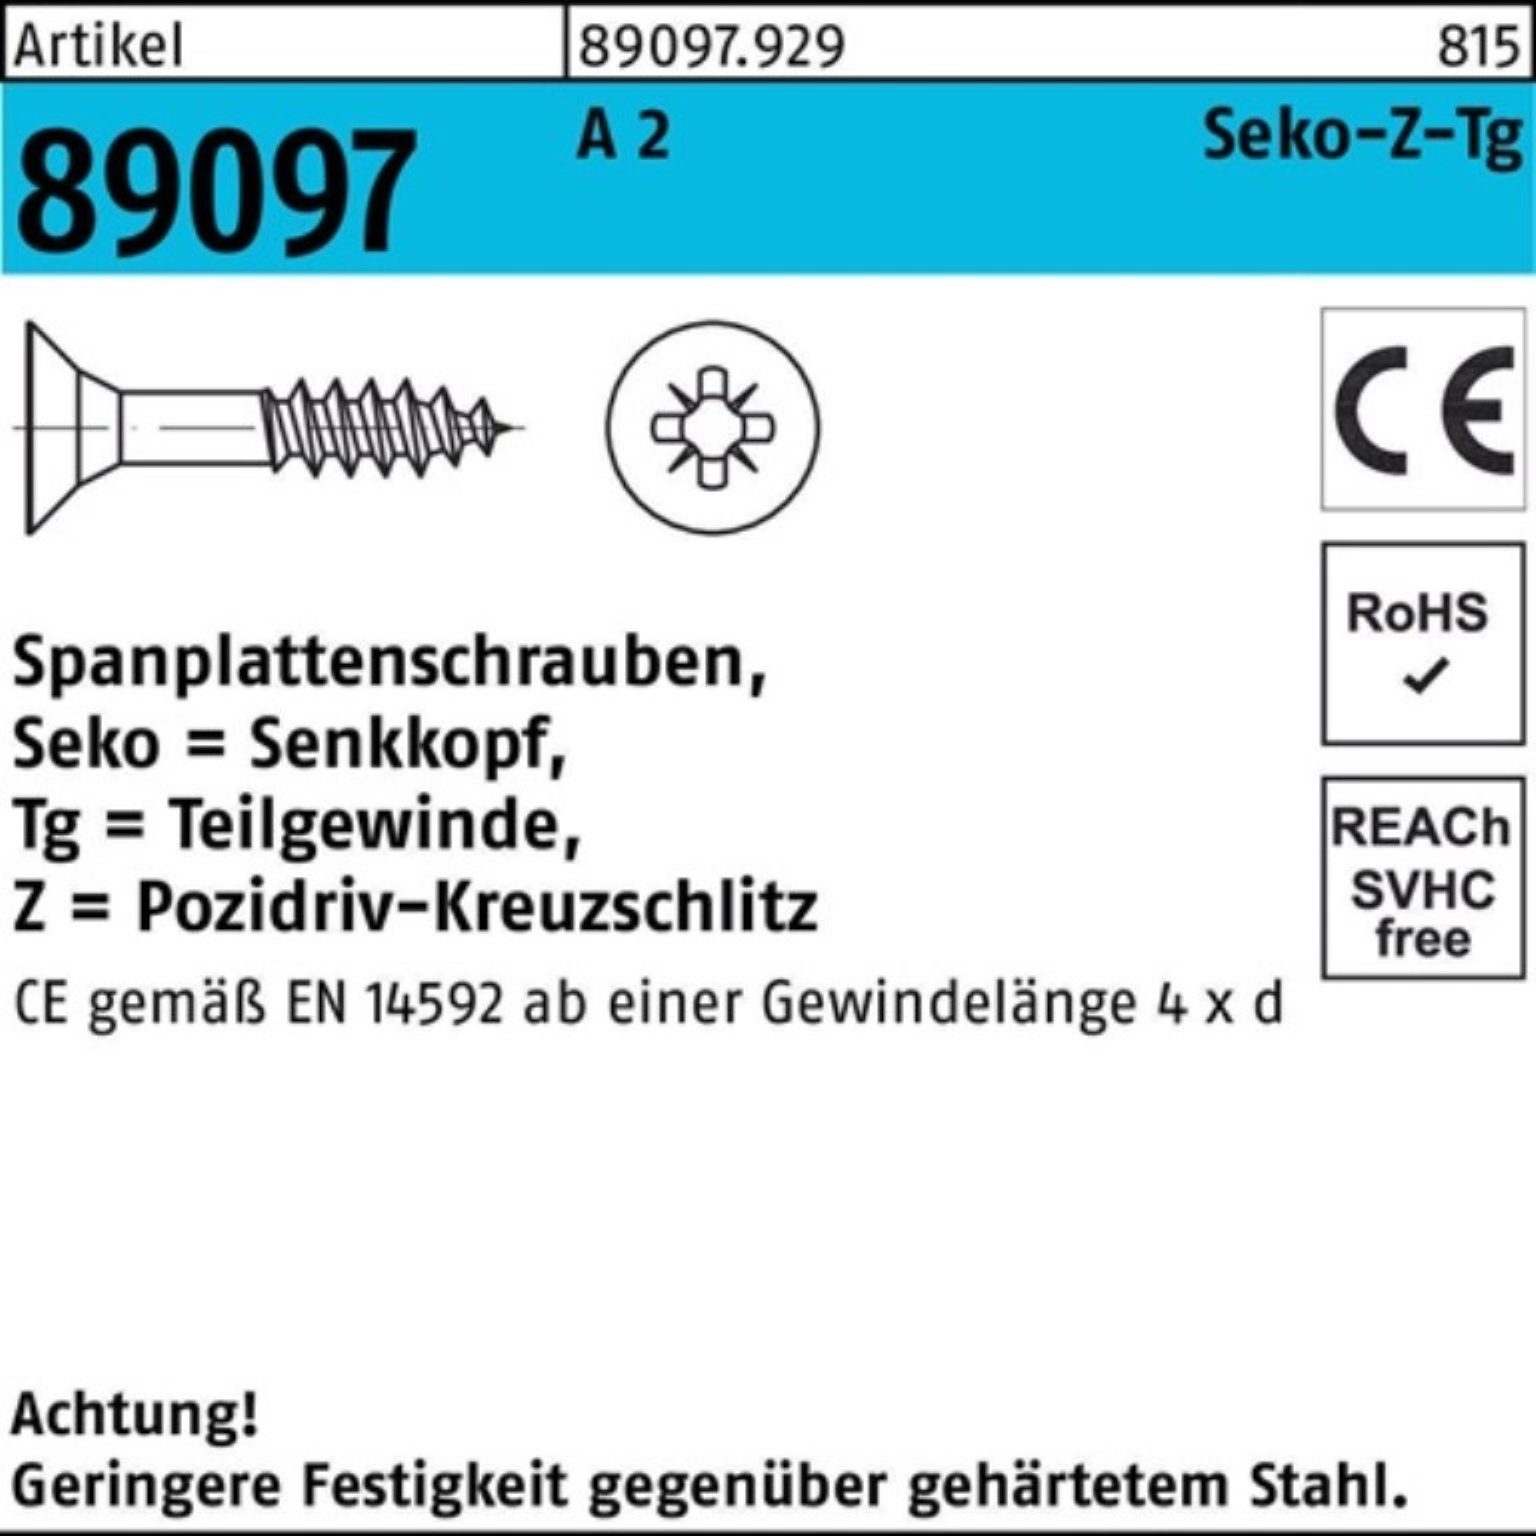 A Spanplattenschraube PZ R Pack 200 2 Stü 50-Z Spanplattenschraube Reyher 4x 200er 89097 SEKO TG